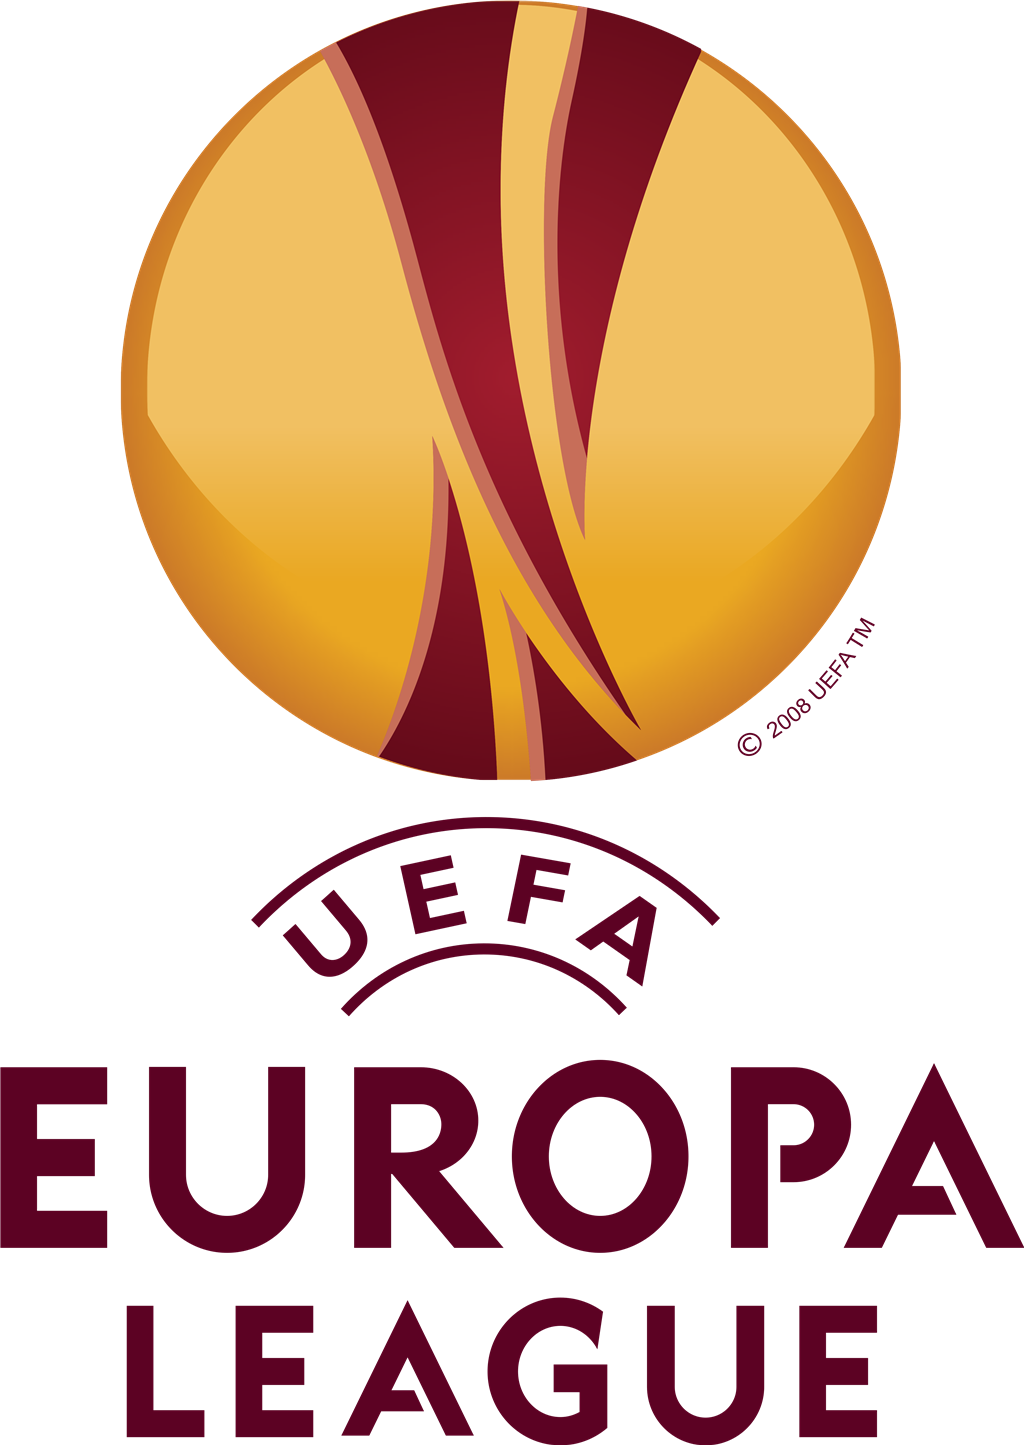 UEFA Europa League logotype, transparent .png, medium, large